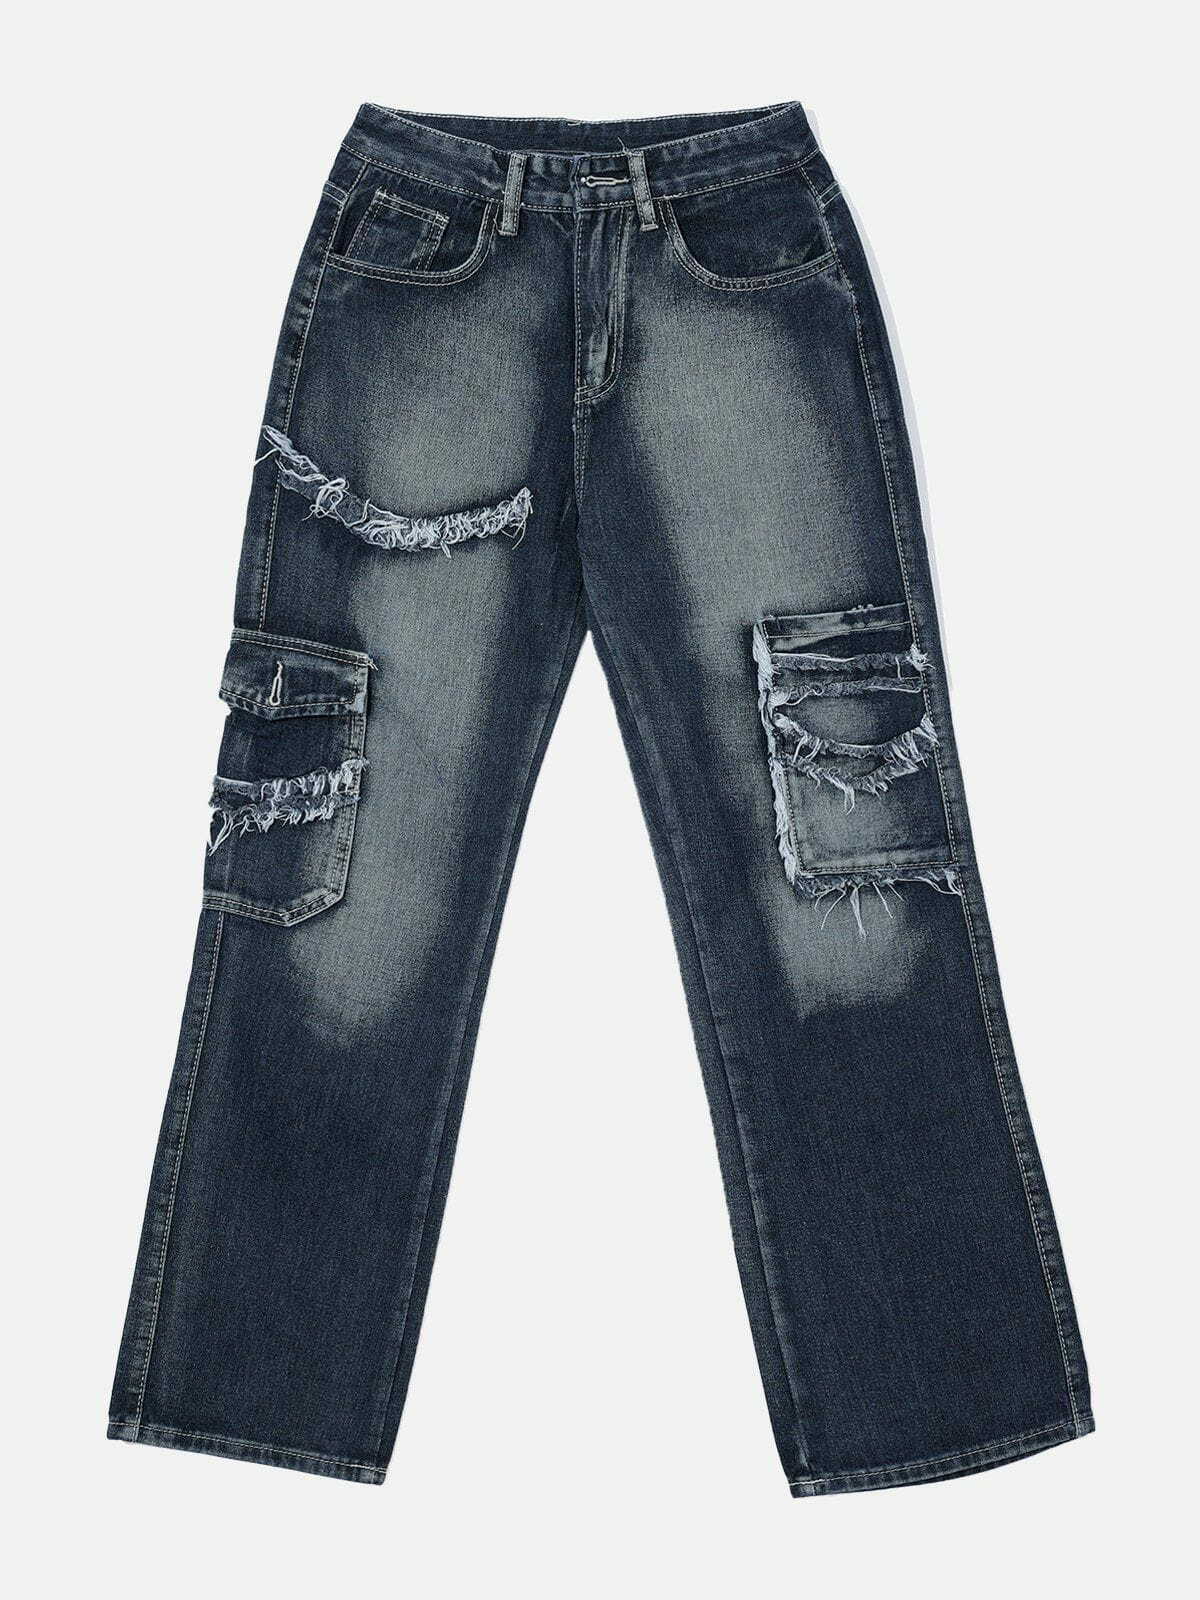 raw edge pocket jeans edgy & functional streetwear 5909